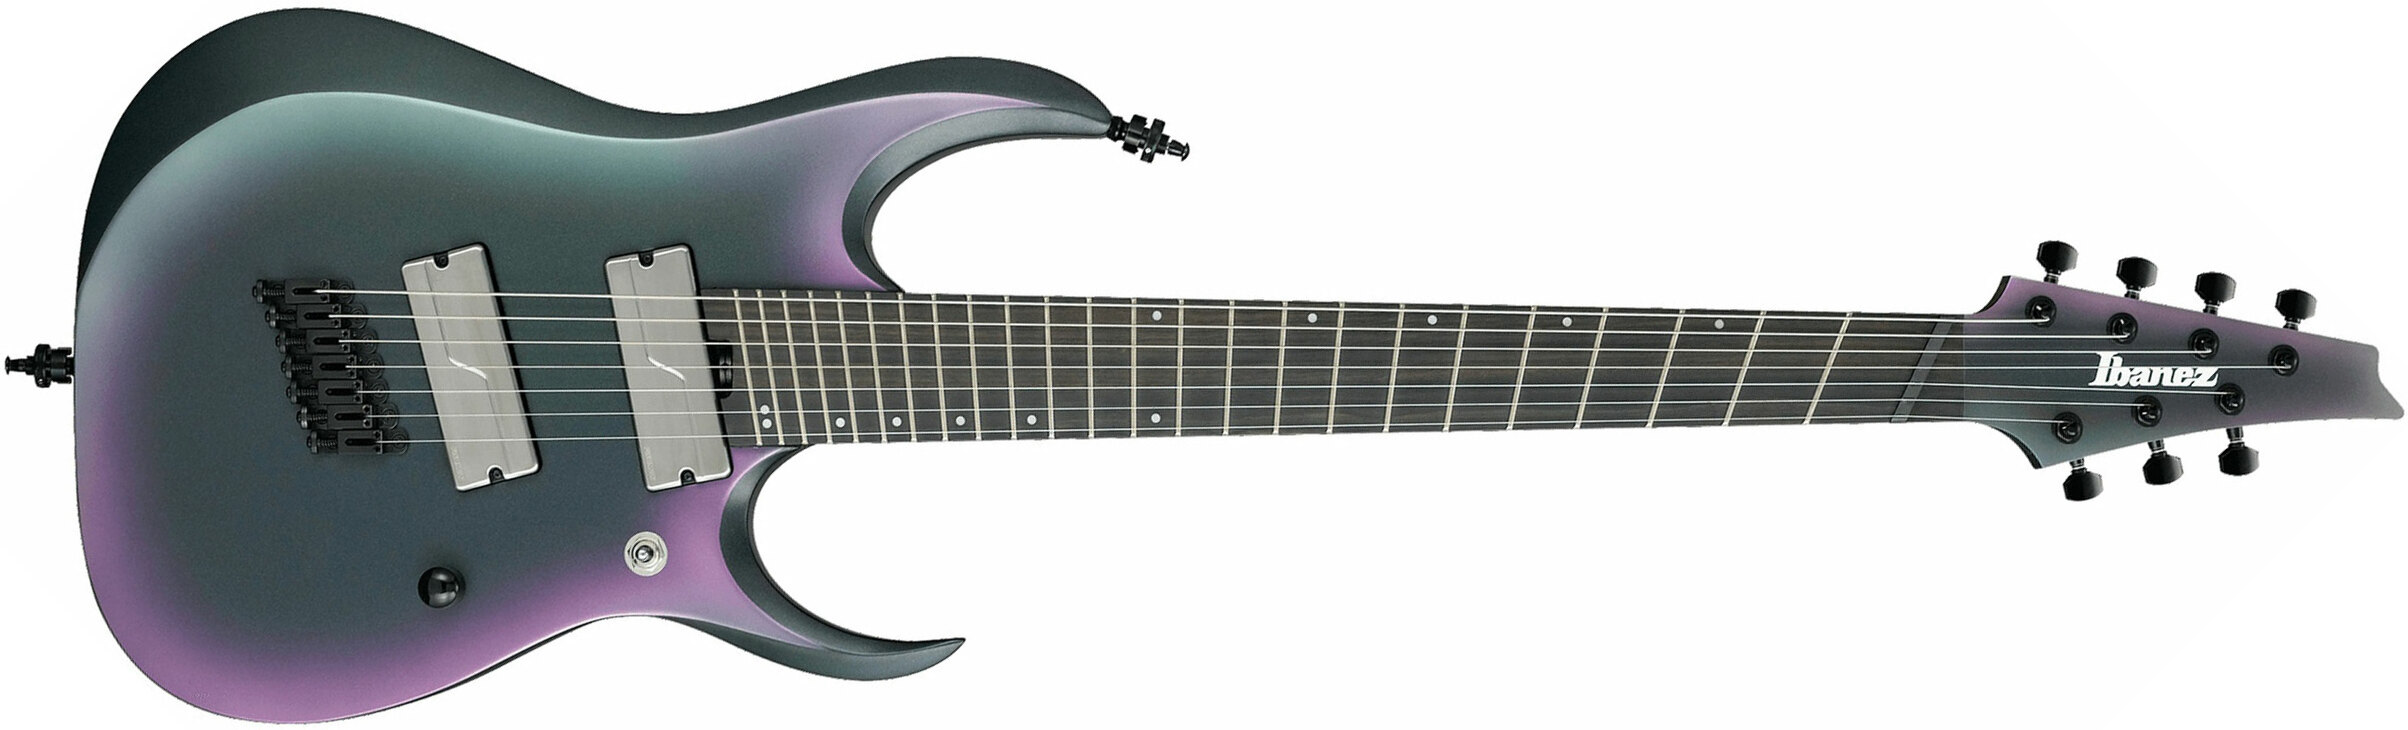 Ibanez Rgd71alms Bam Axion Label Hh Fishman Ht Eb - Black Aurora Burst Matte - Multi-Scale Guitar - Main picture